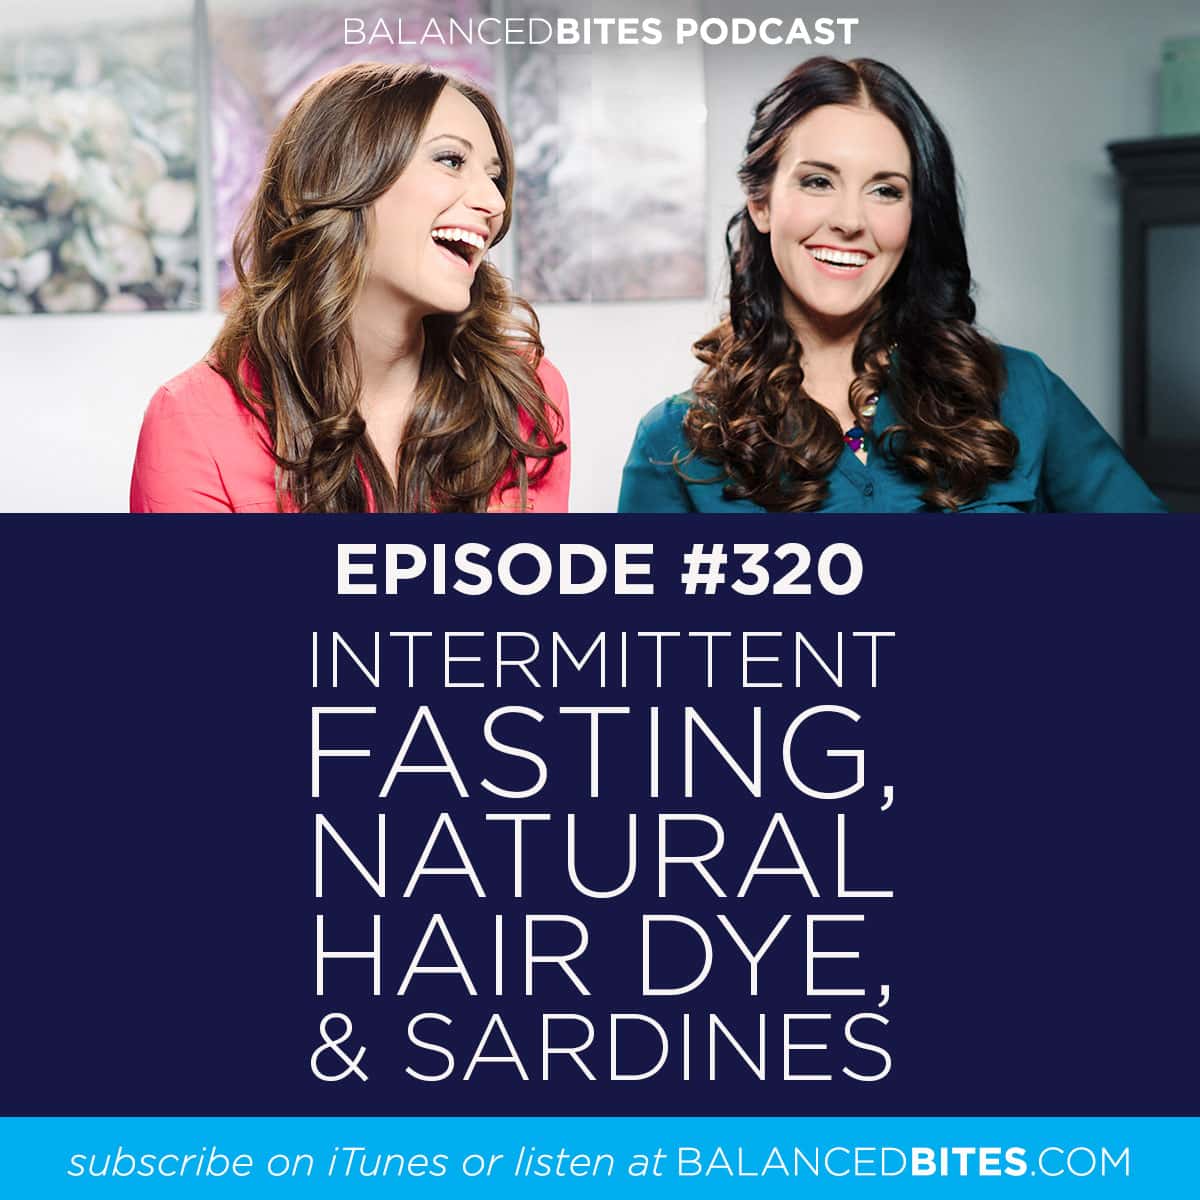 Diane Sanfilippo & Liz Wolfe | Balanced Bites Podcast | Intermittent Fasting, Natural Hair Dye, & Sardines